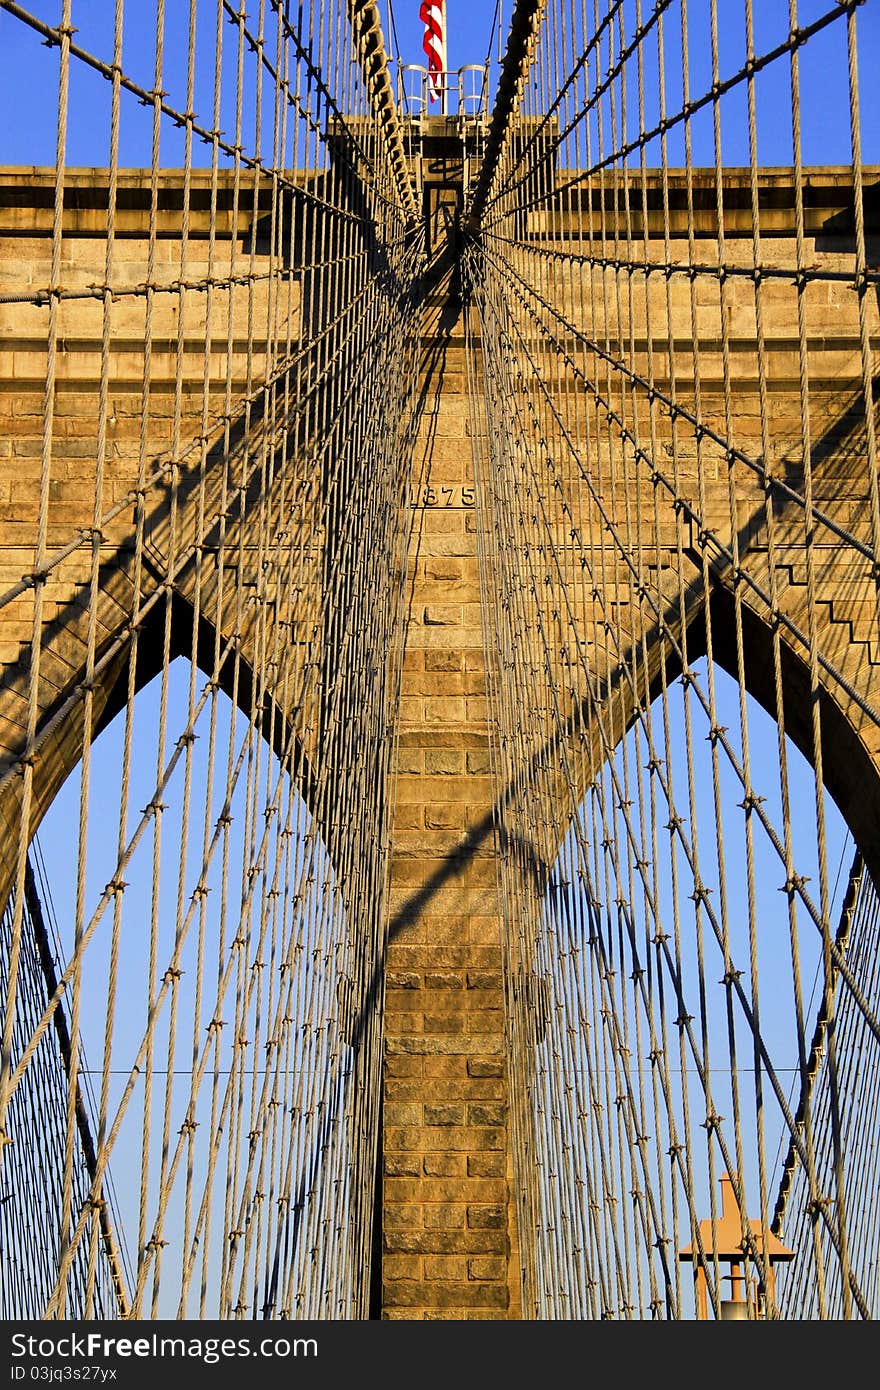 Photo taken at Brooklyn Bridge - NYC. Photo taken at Brooklyn Bridge - NYC